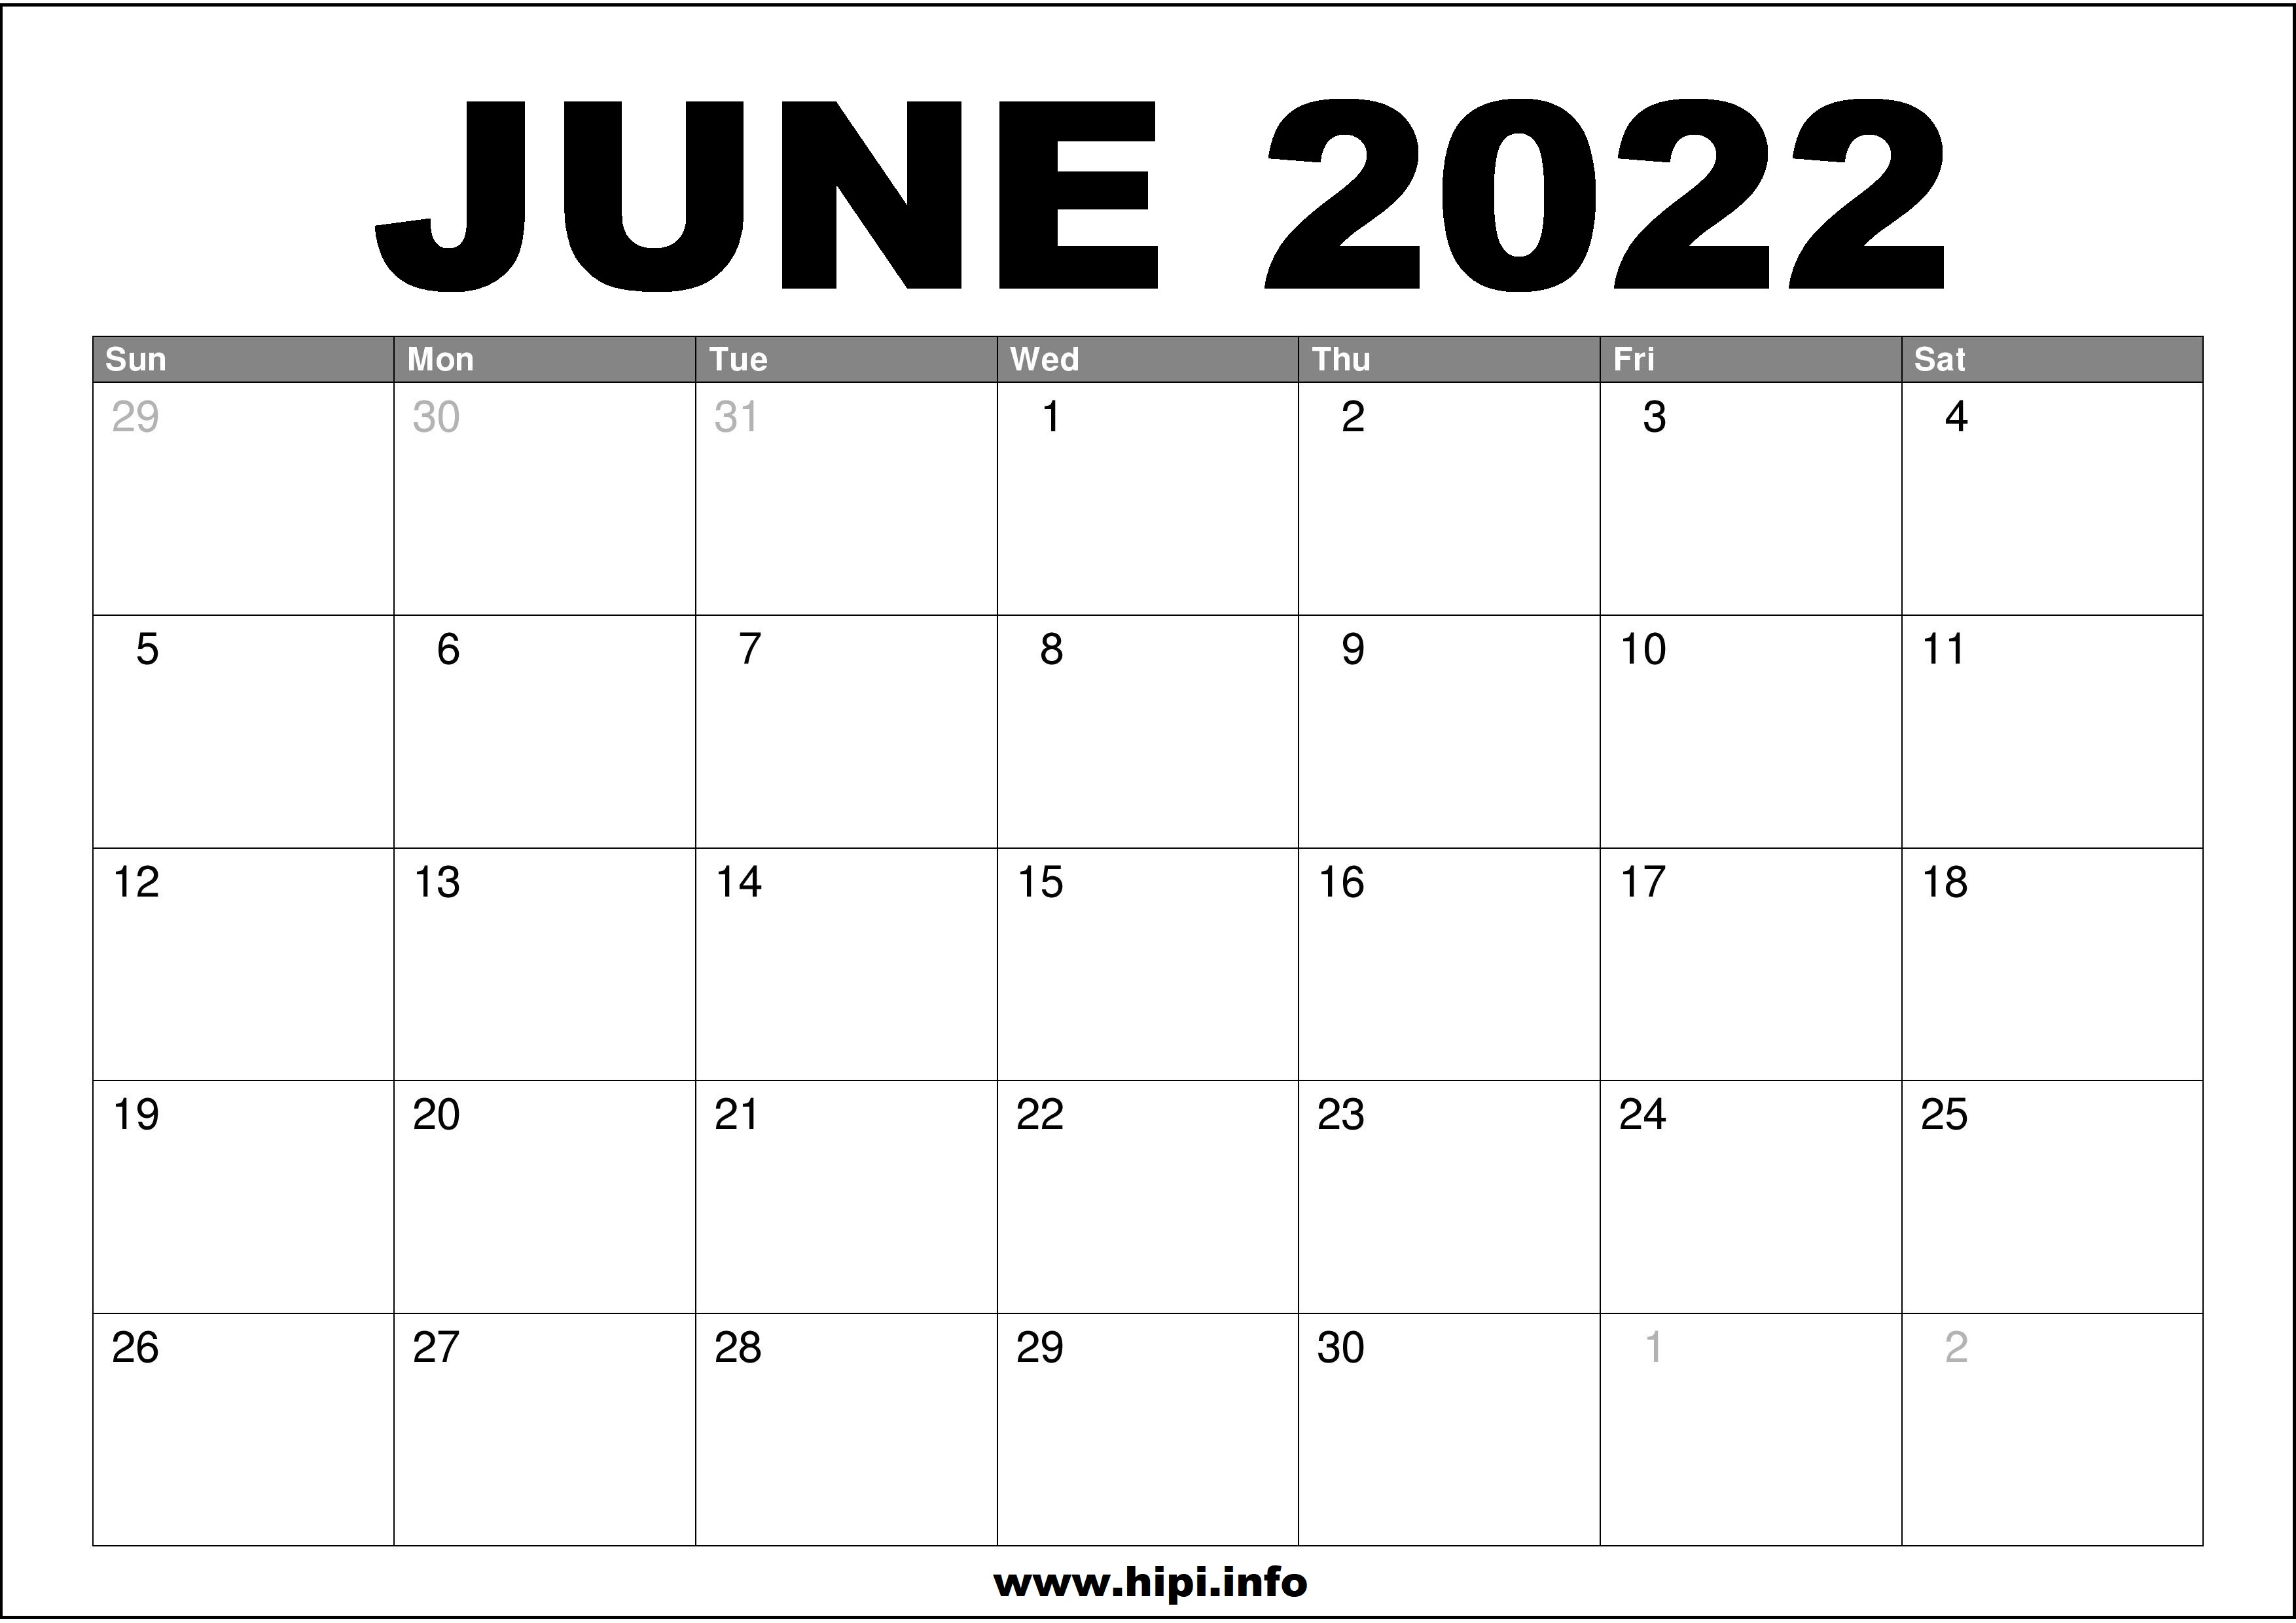 June 2022 Monthly Calendar June 2022 Calendar Printable Free - Hipi.info | Calendars Printable Free